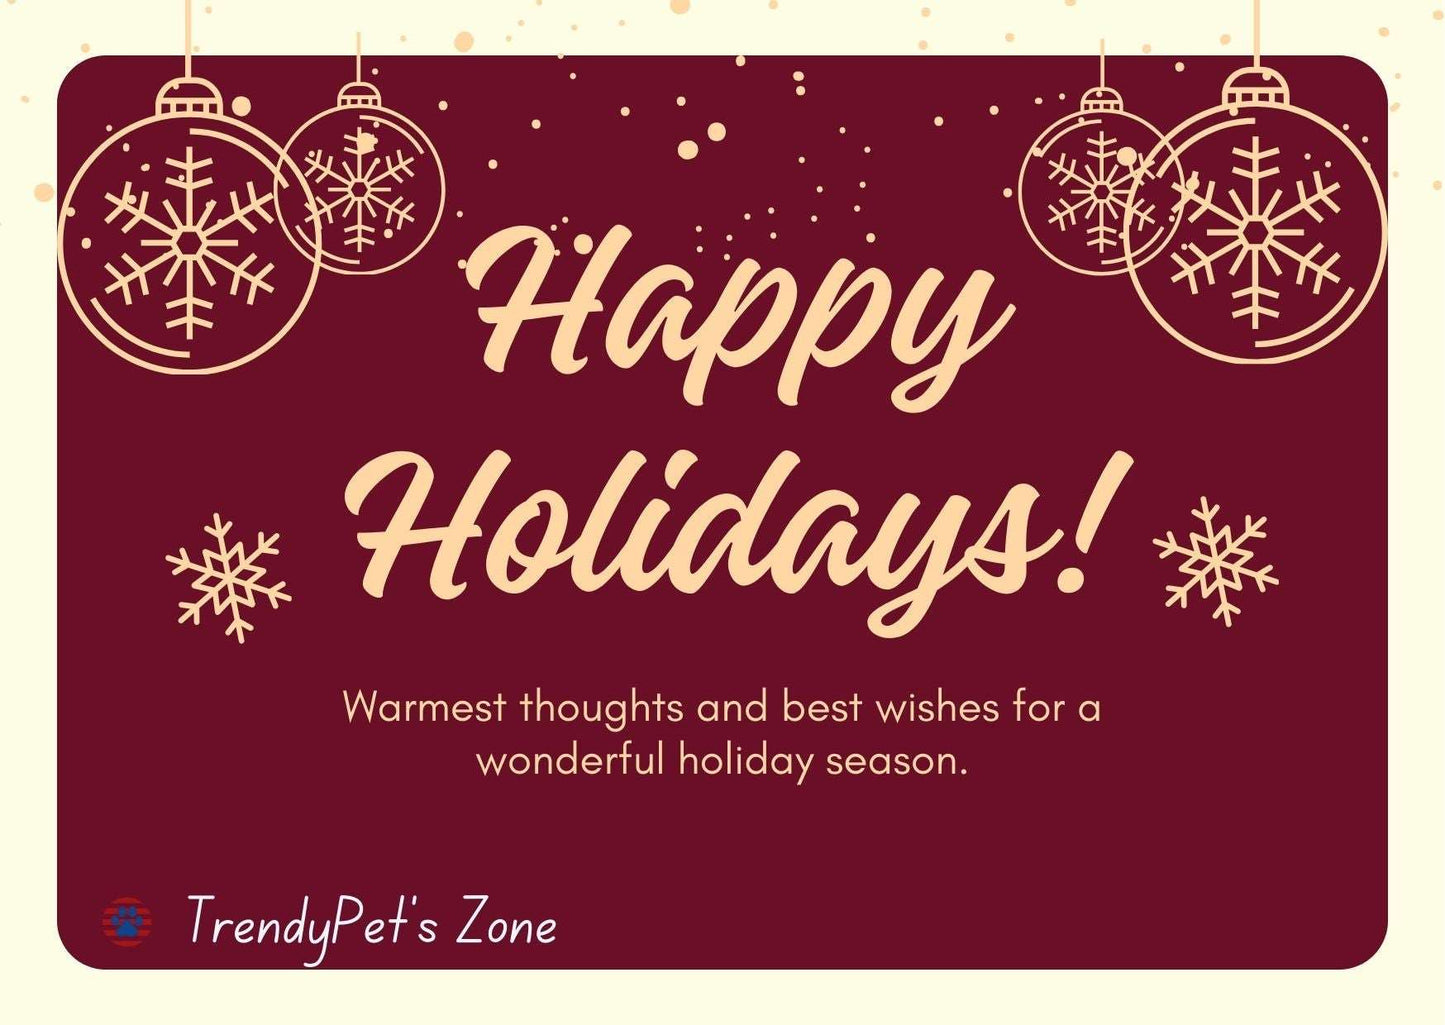 TRENDYPET'S ZONE Gift Card